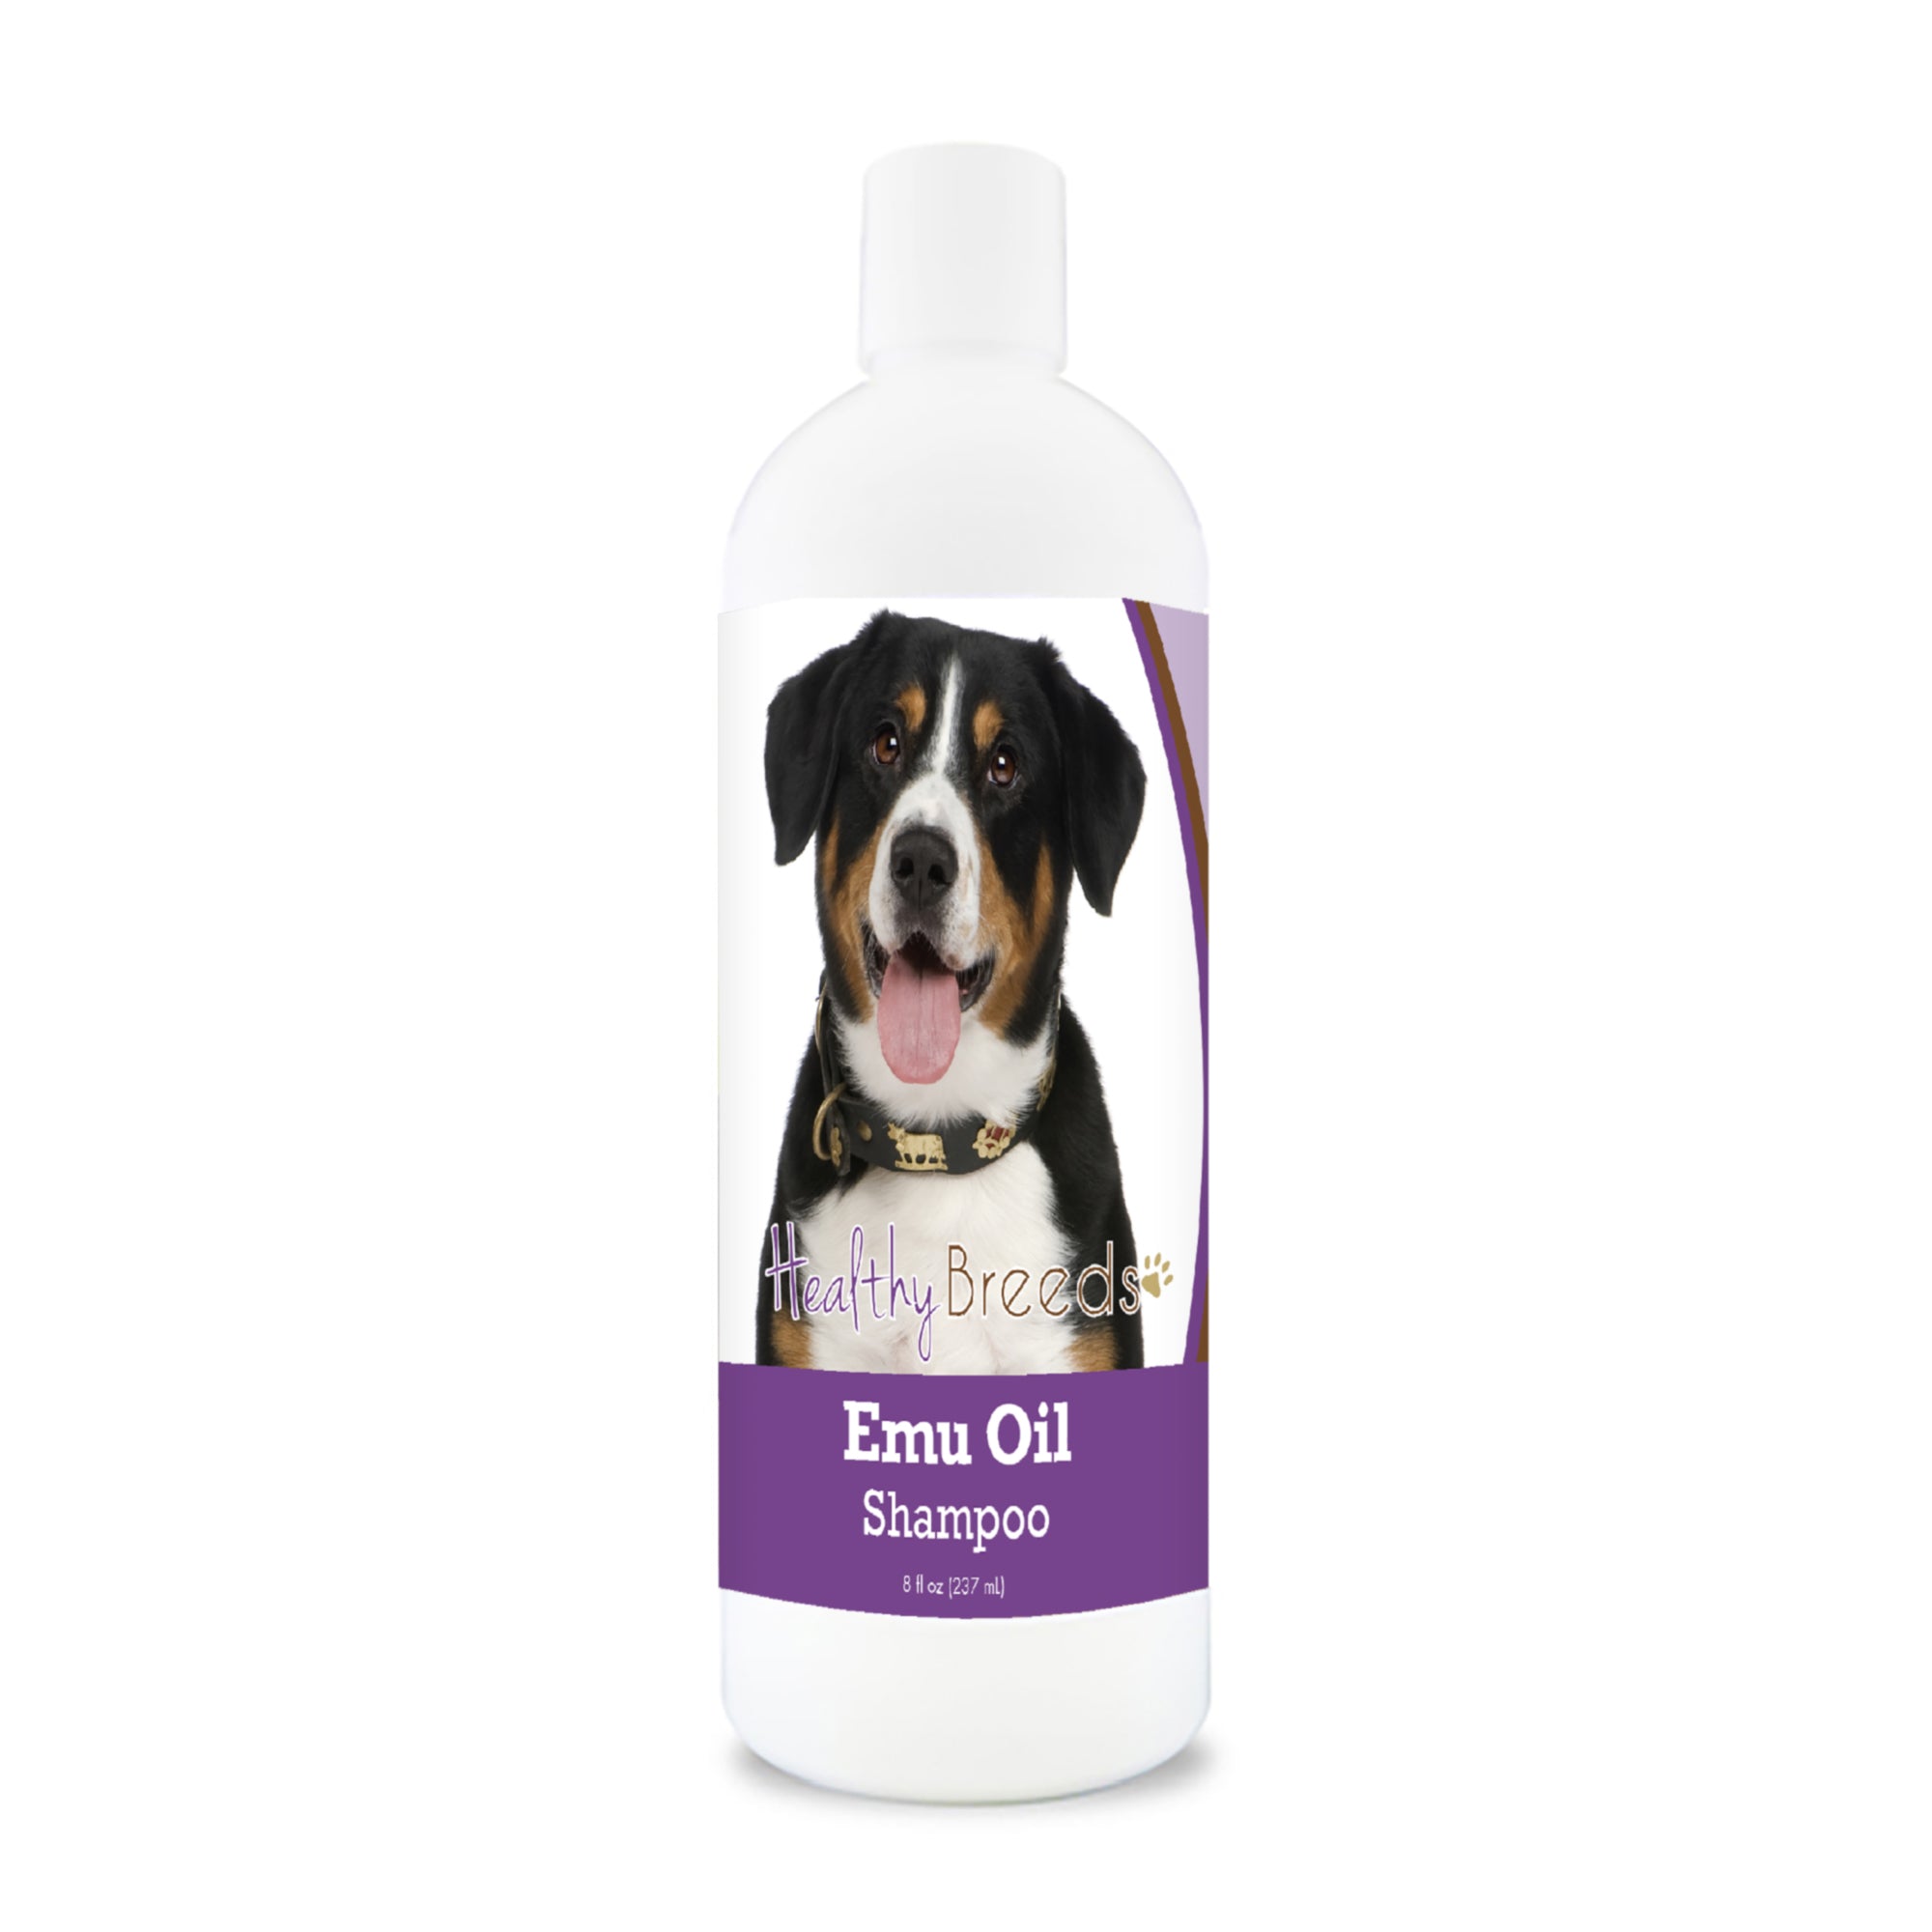 Entlebucher Mountain Dog Emu Oil Shampoo 8 oz